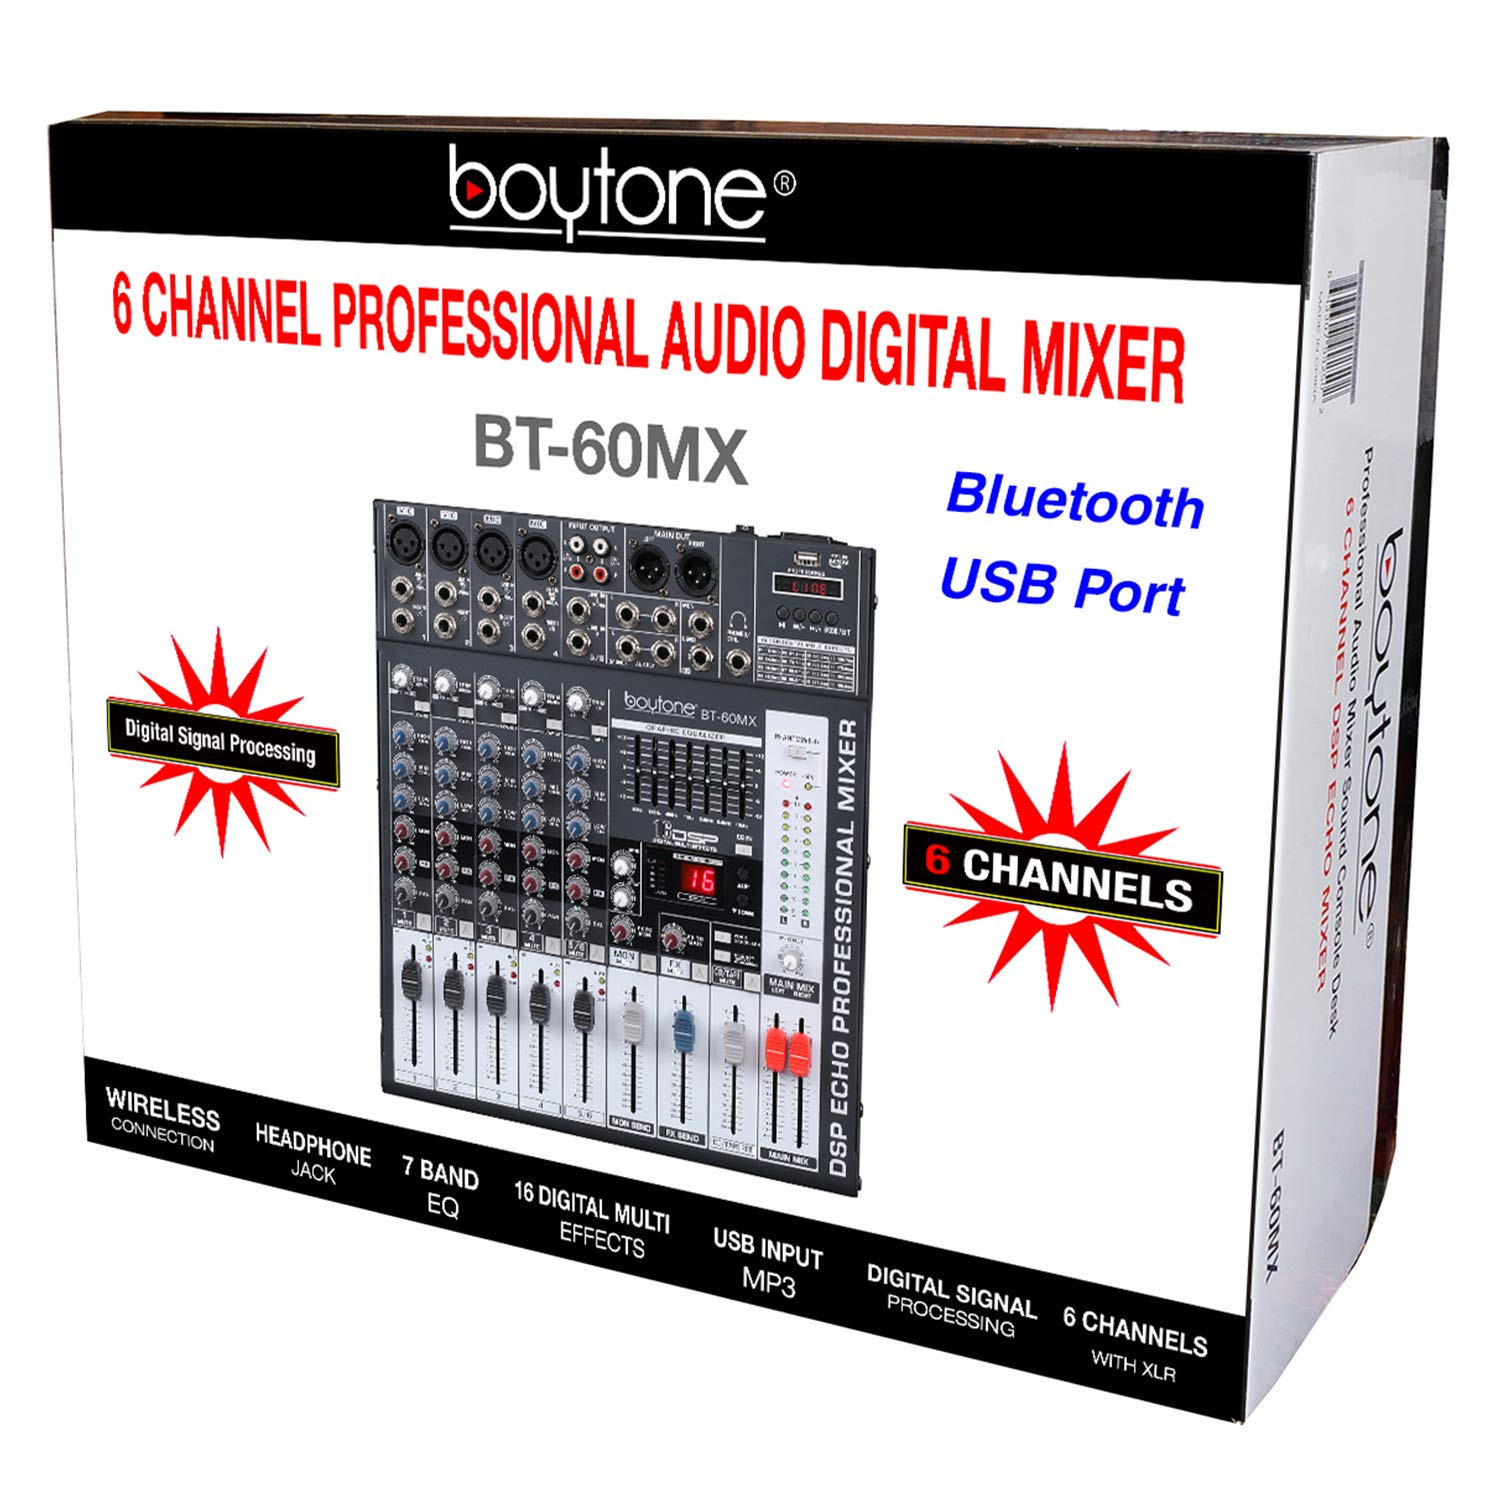 Boytone BT-60MX, 6 Channel Bluetooth Audio Mixer - DJ Sound Controller, USB MP3 Player, 4 XLR Microphone Jack, 7 Band EQ, 16 DSP Digital Multi Effects Processor, RCA IN-OUT Jack, 48V Phantom Power